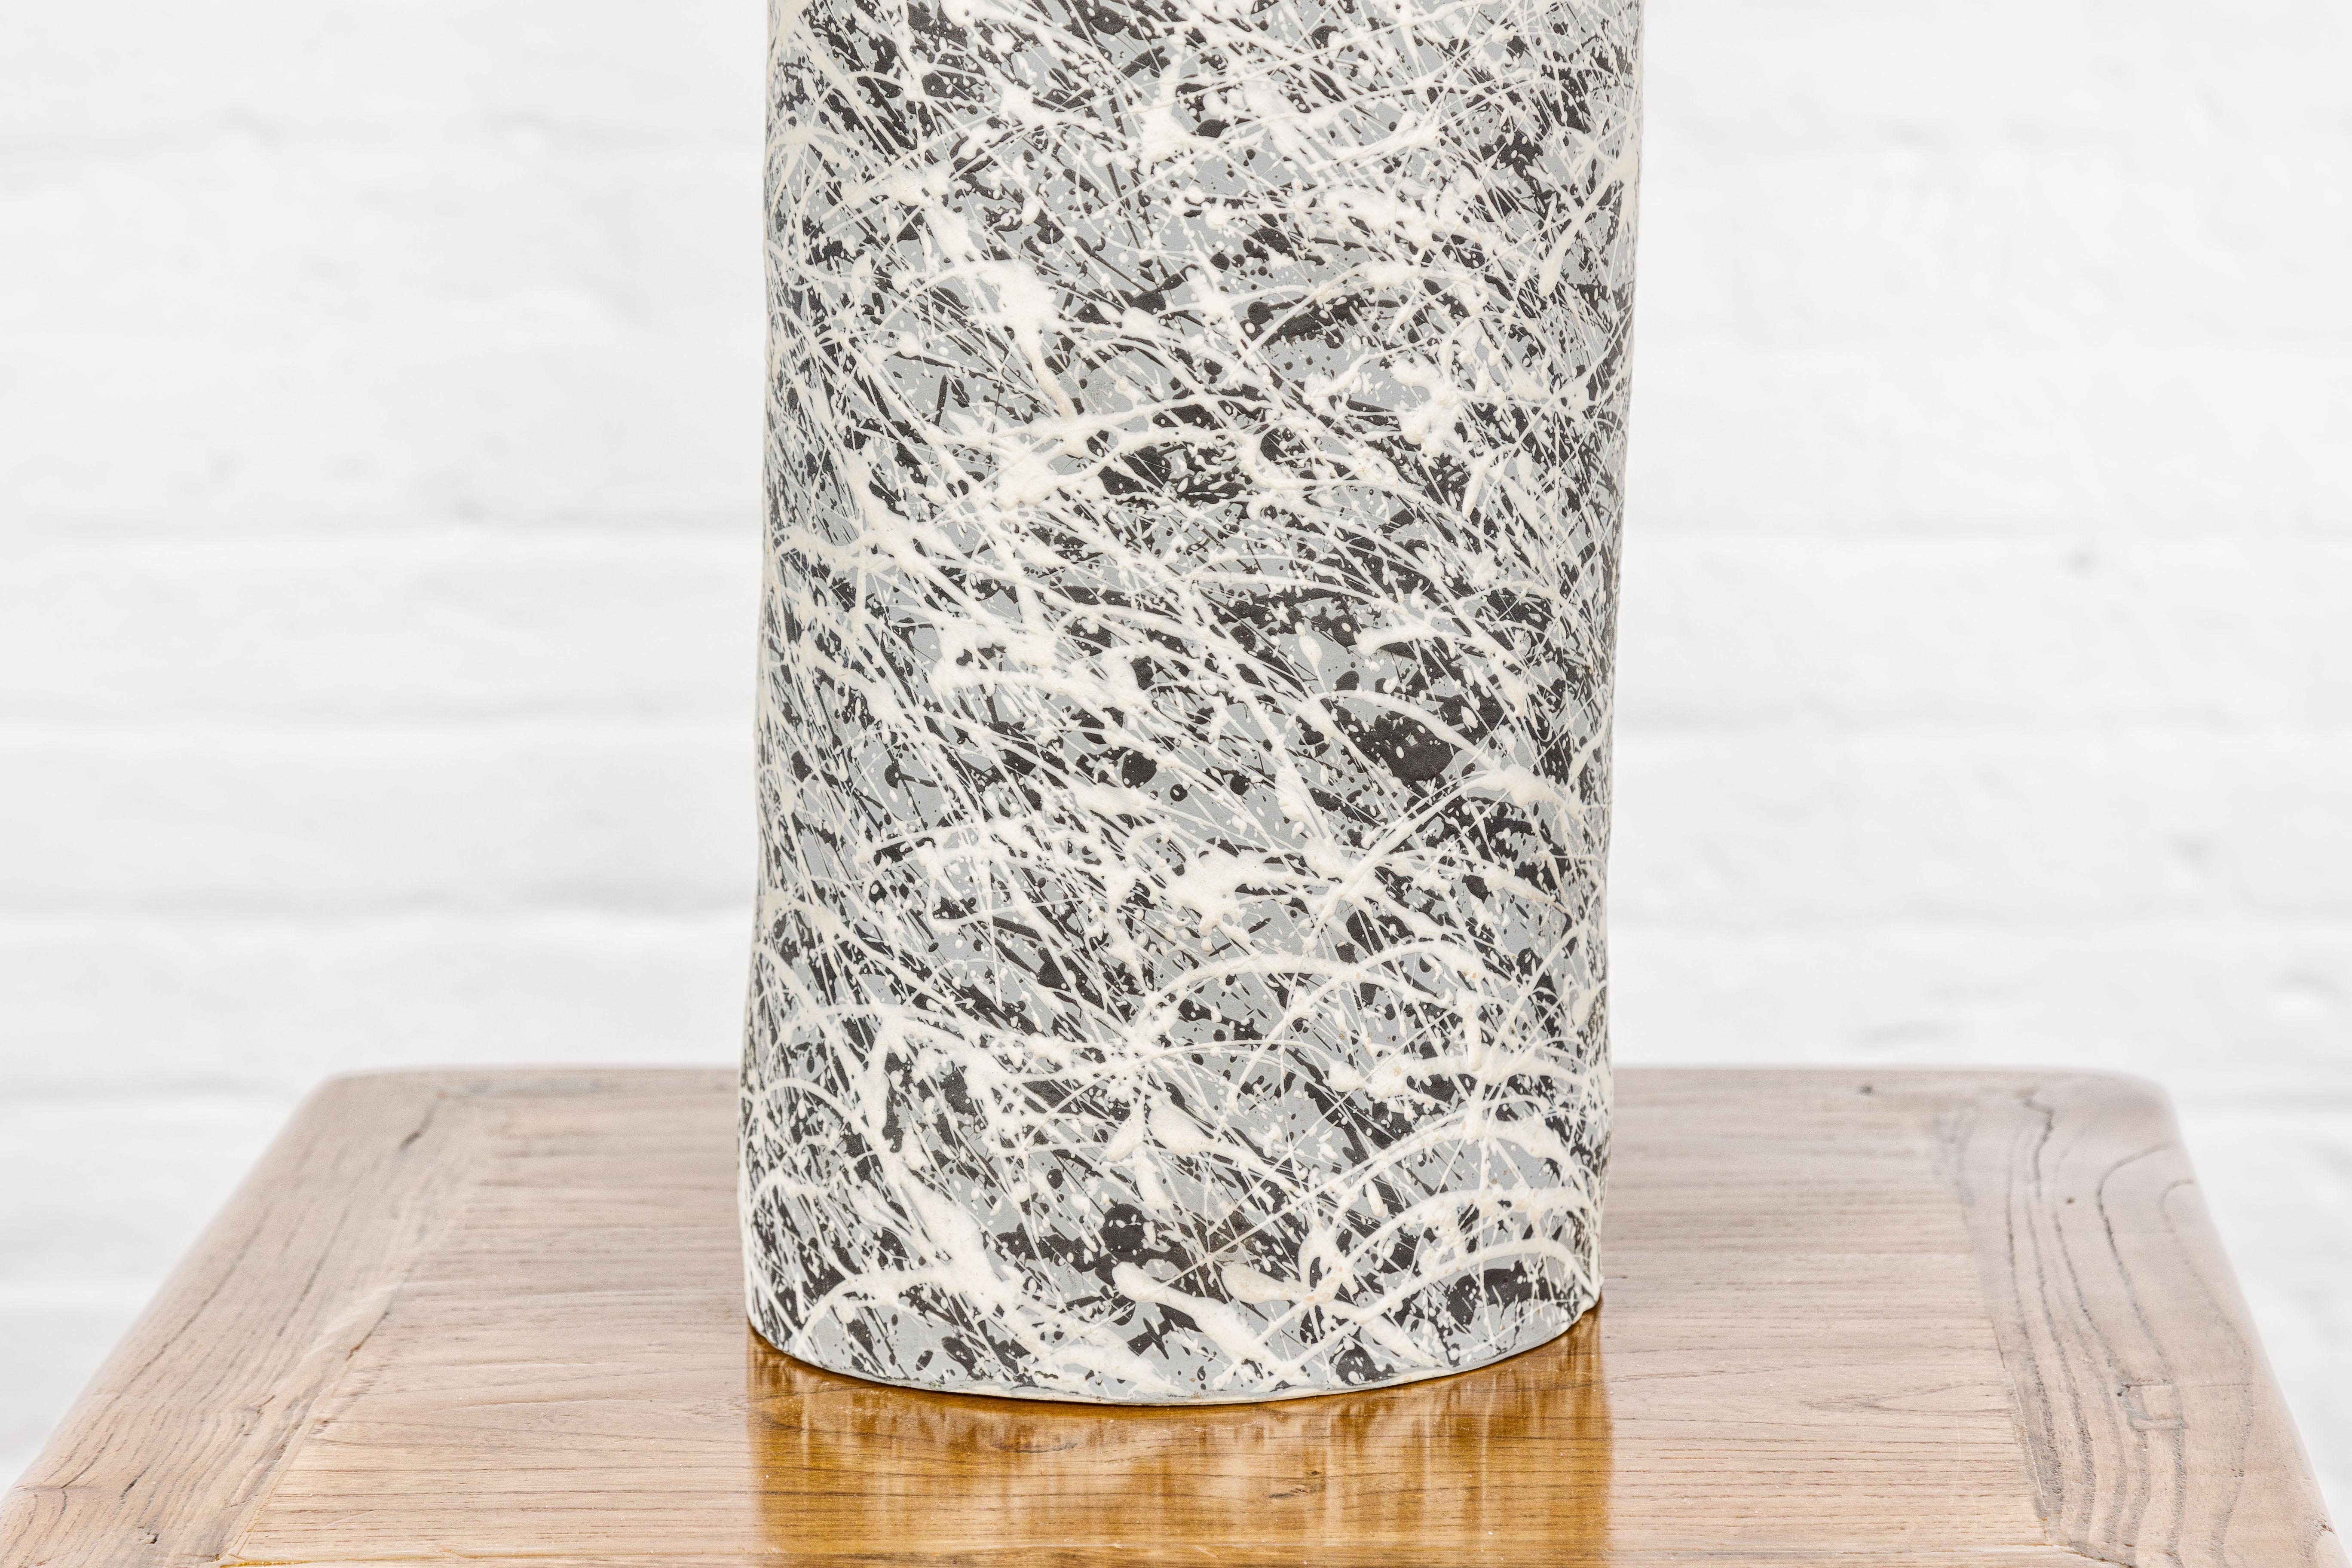 Textured Black, Gray and Black Spattered Ceramic Vase For Sale 3